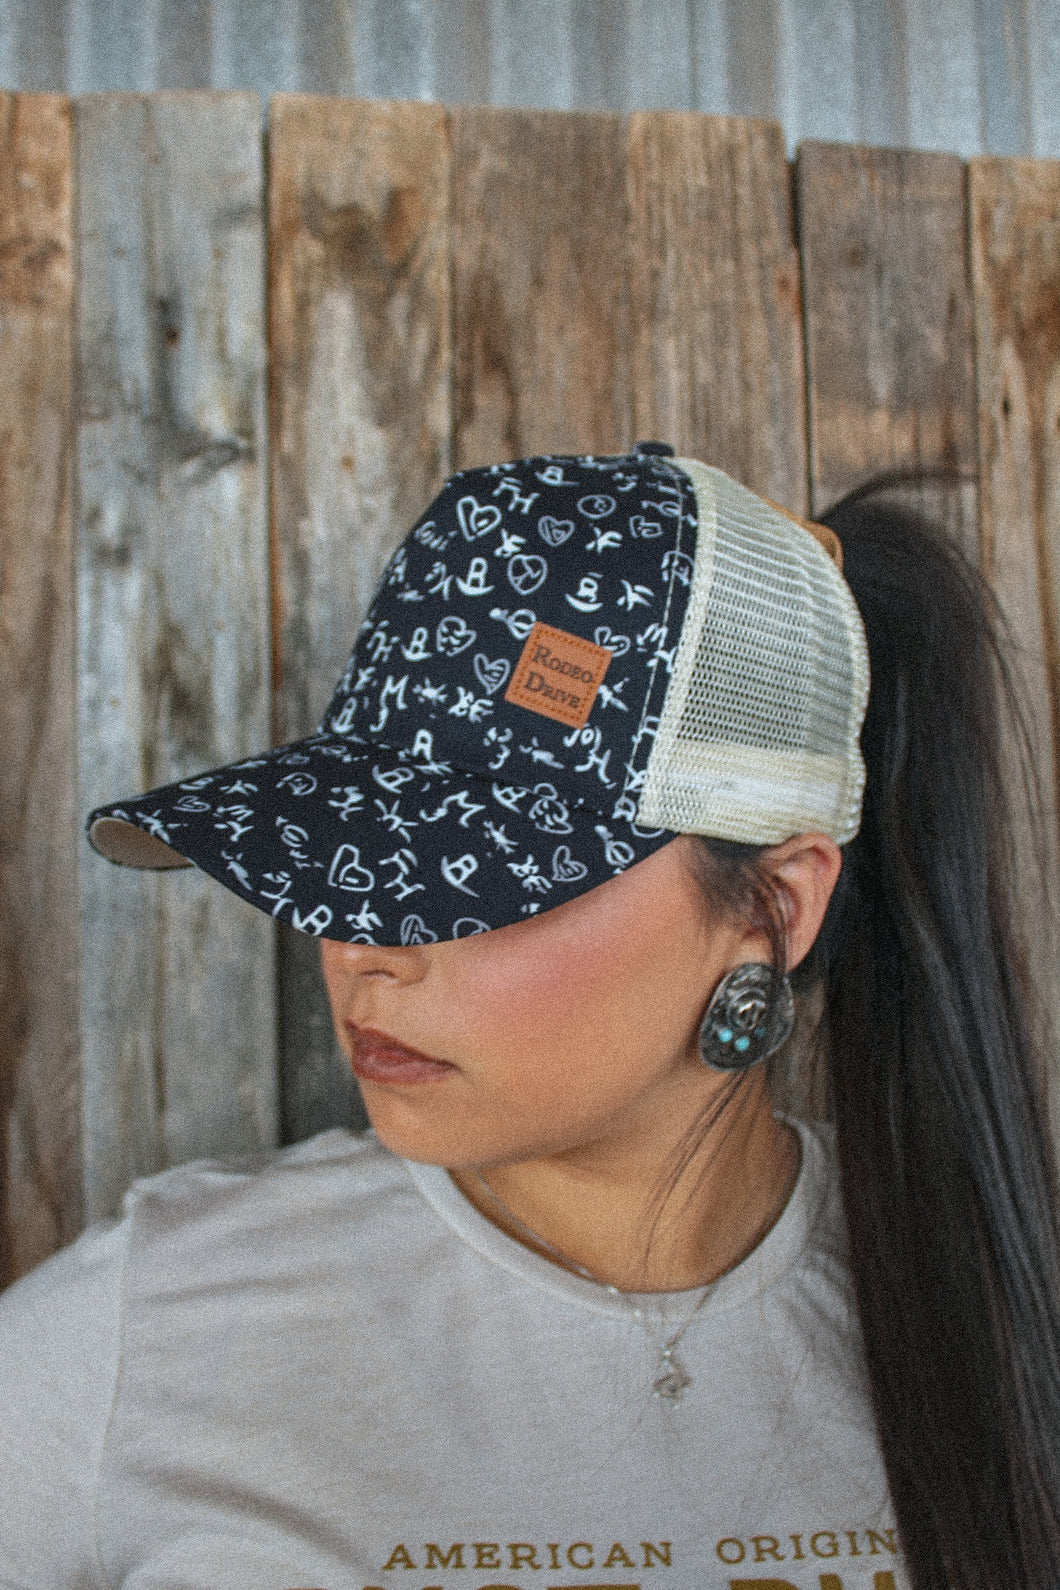 Branded Trucker Hat